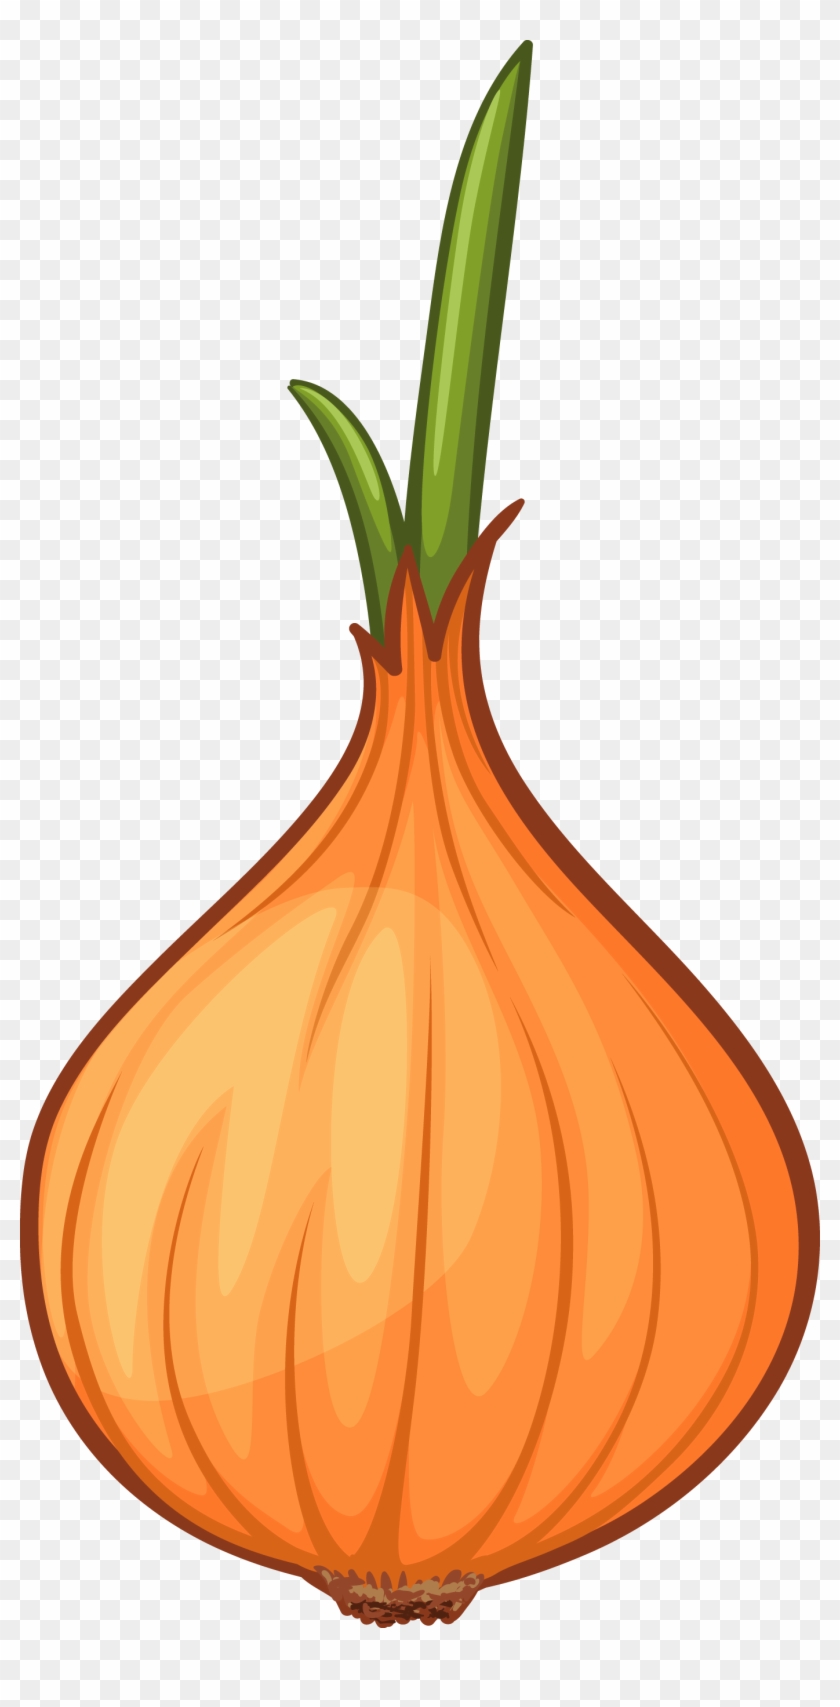 Calabaza Onion Cartoon Clip Art - Onion - Free Transparent PNG Clipart  Images Download